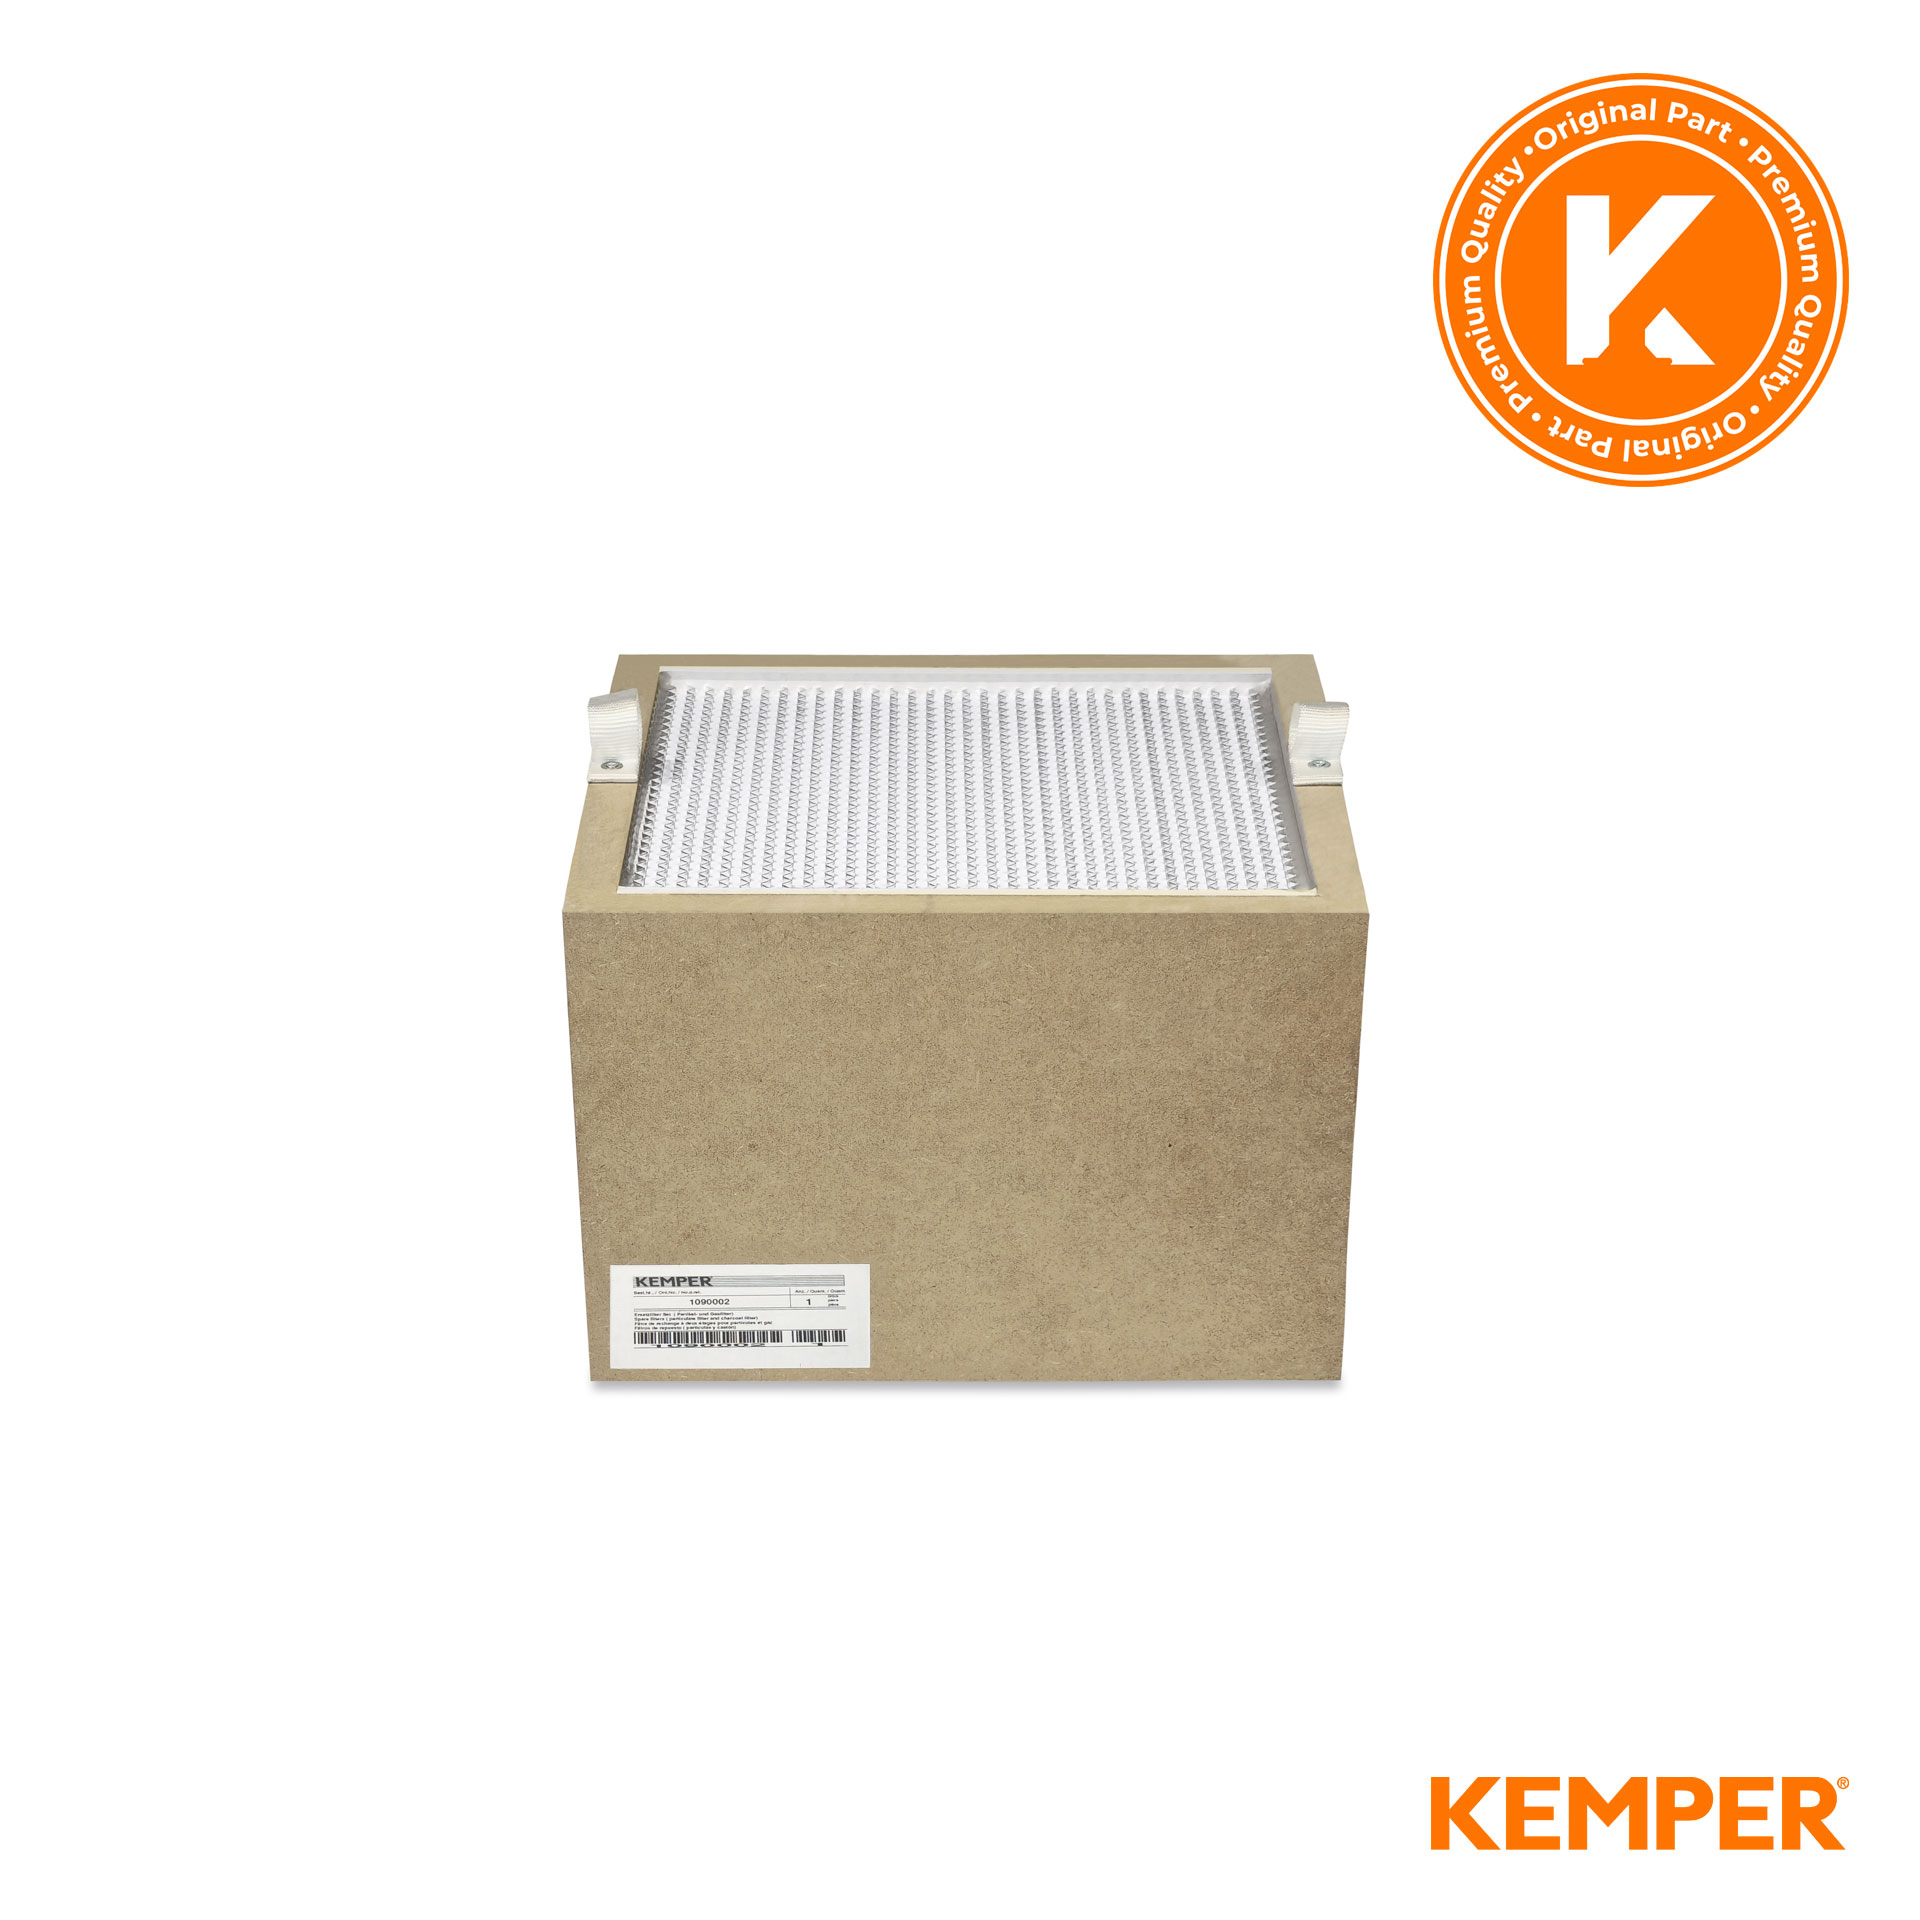 KEMPER SolderFil Schwebstofffilter - H13 - 2,3 m²